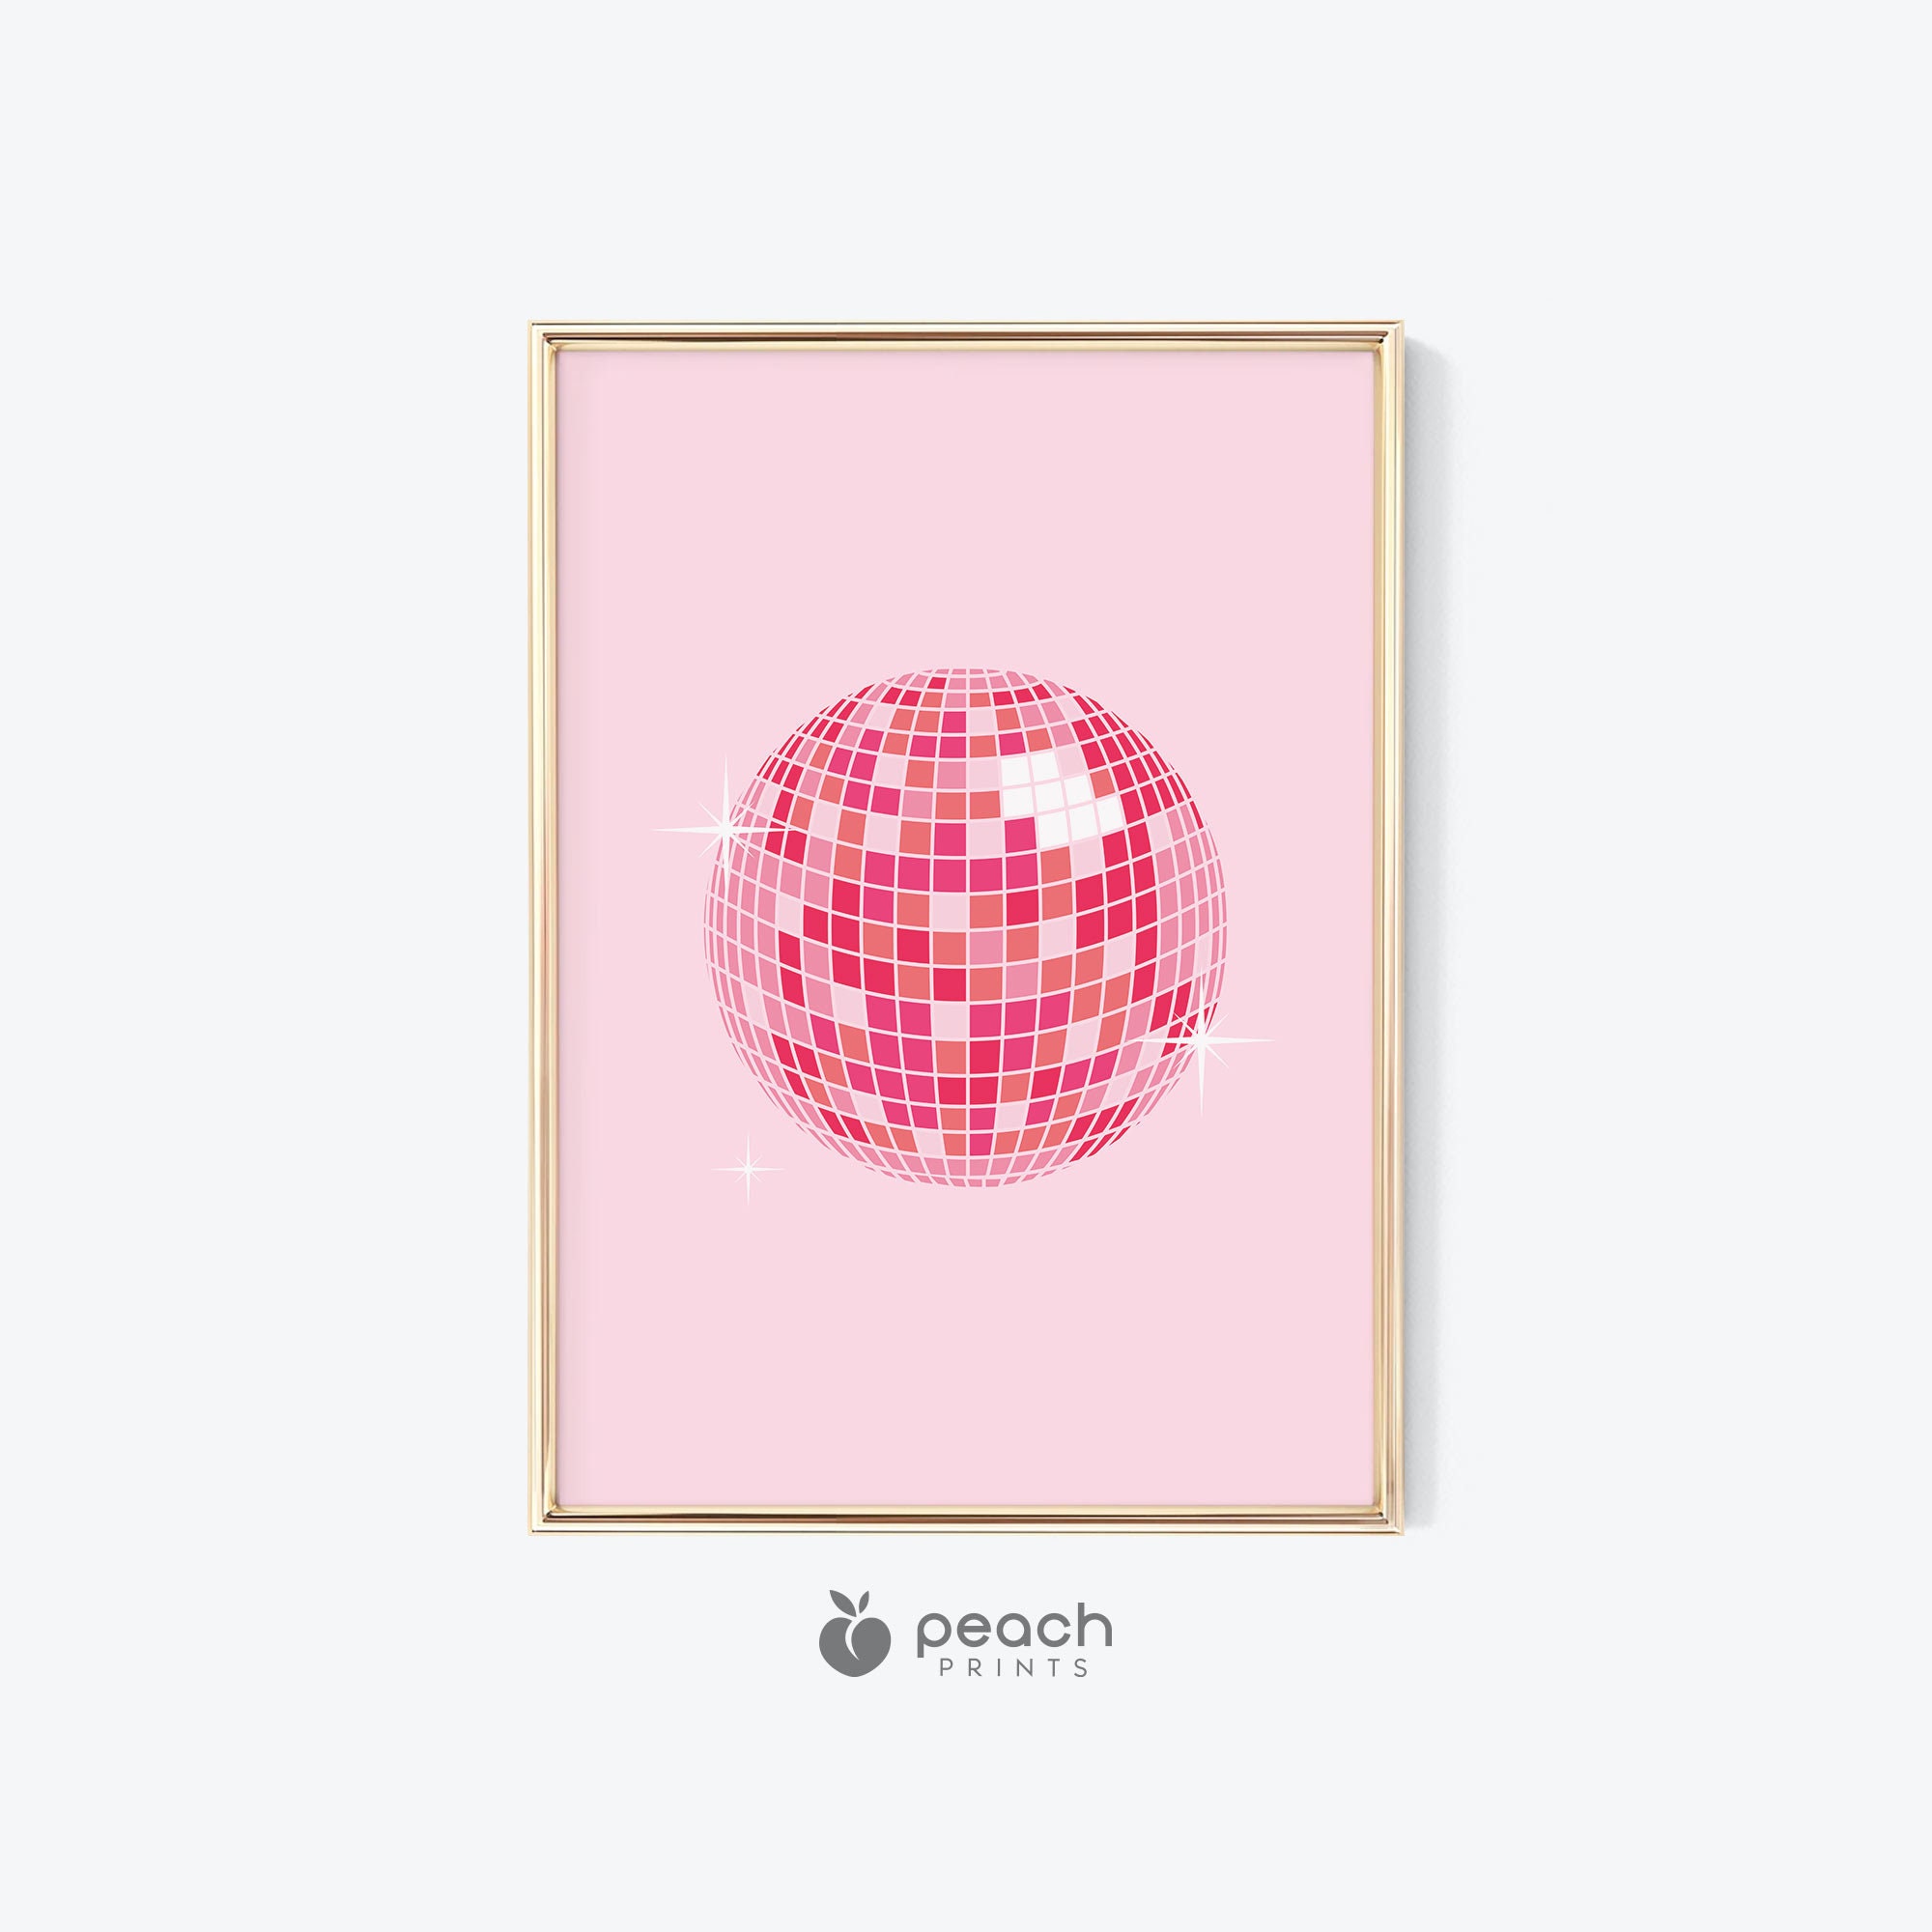 Disco ball- dance the night away- Orange and pink- pink background Art Print